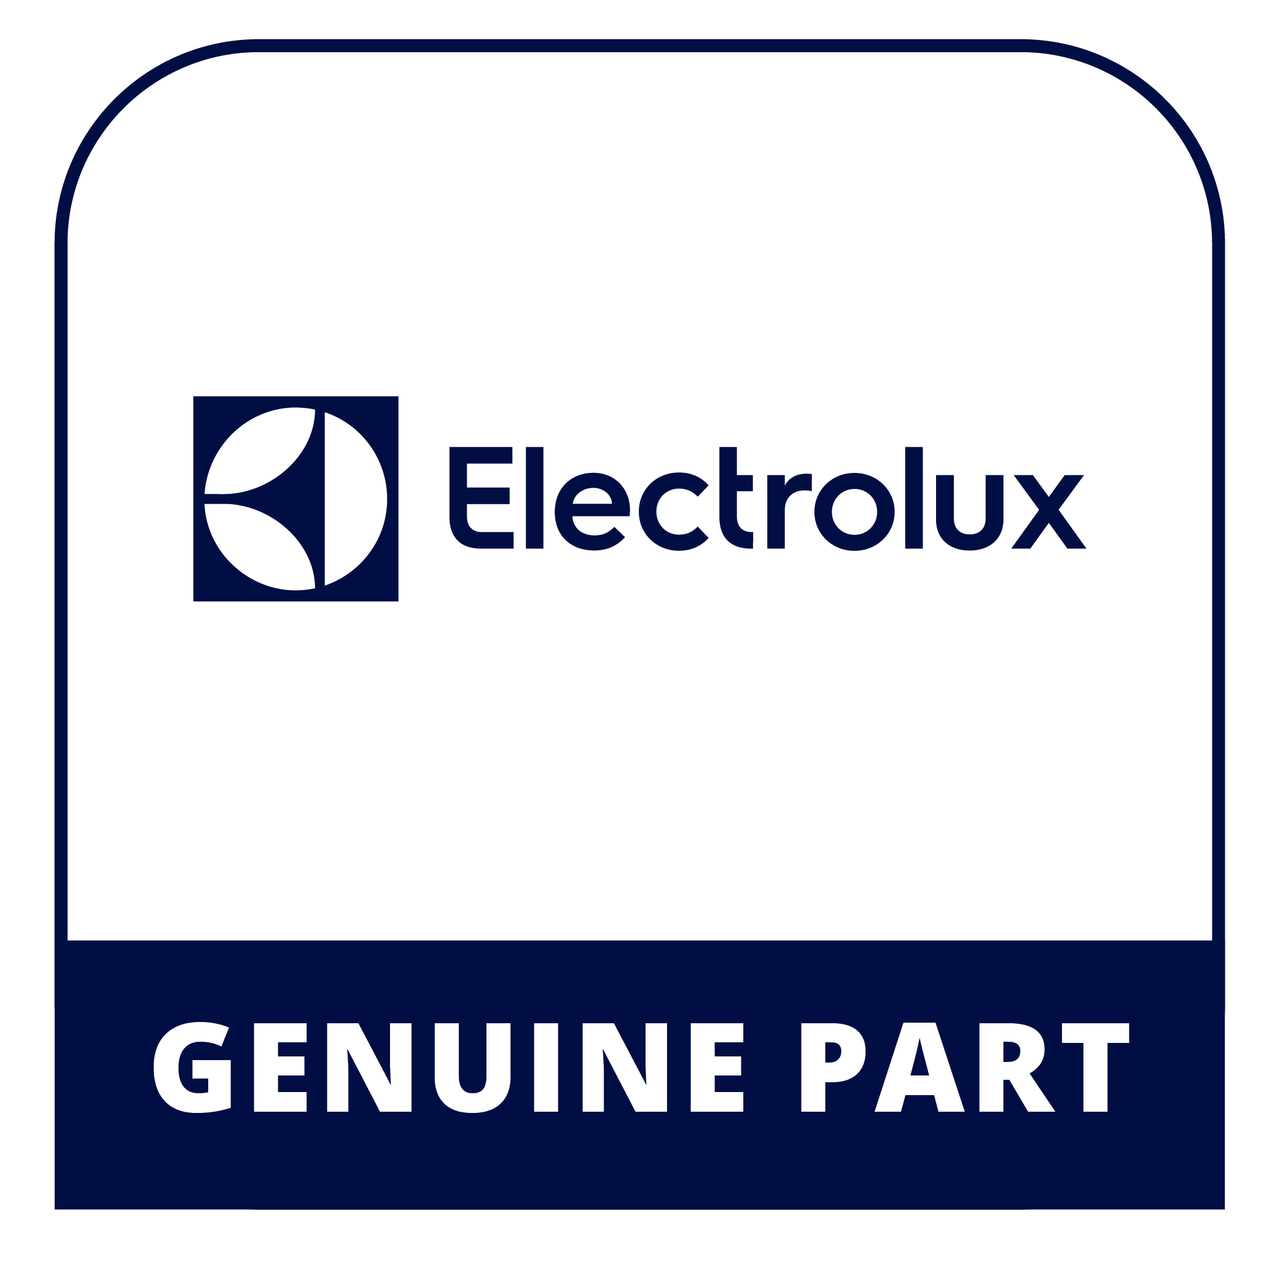 Frigidaire - Electrolux 5304494421 Dsp Doorpanel - Genuine Electrolux Part